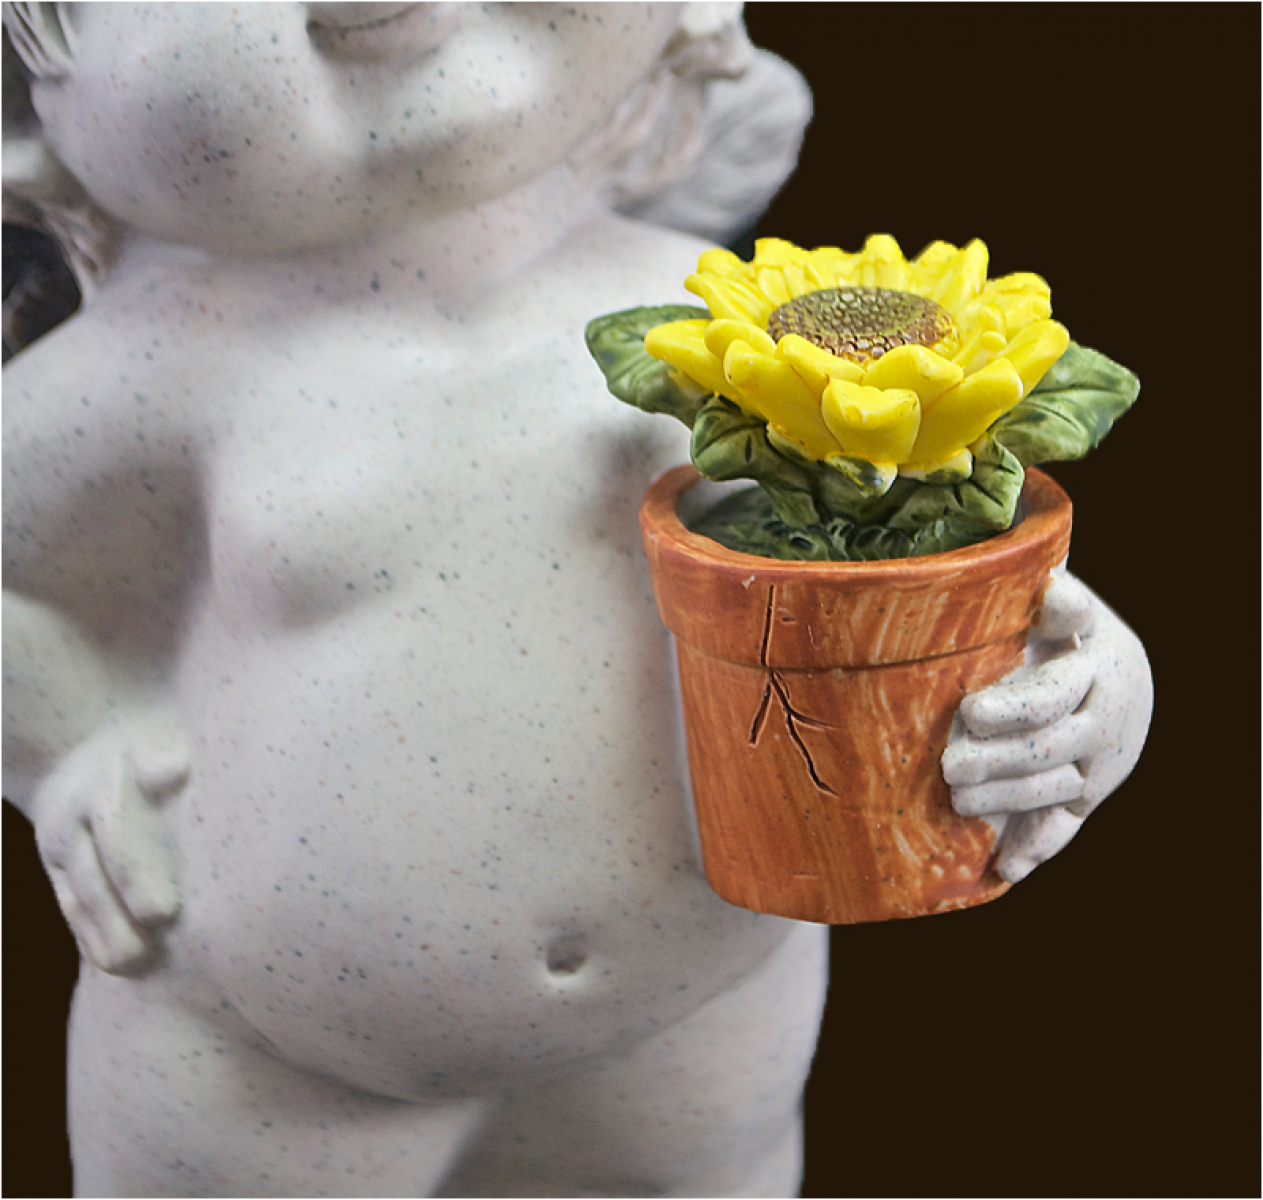 IGOR mit Blumentopf (Figur 3) Höhe: 24 cm